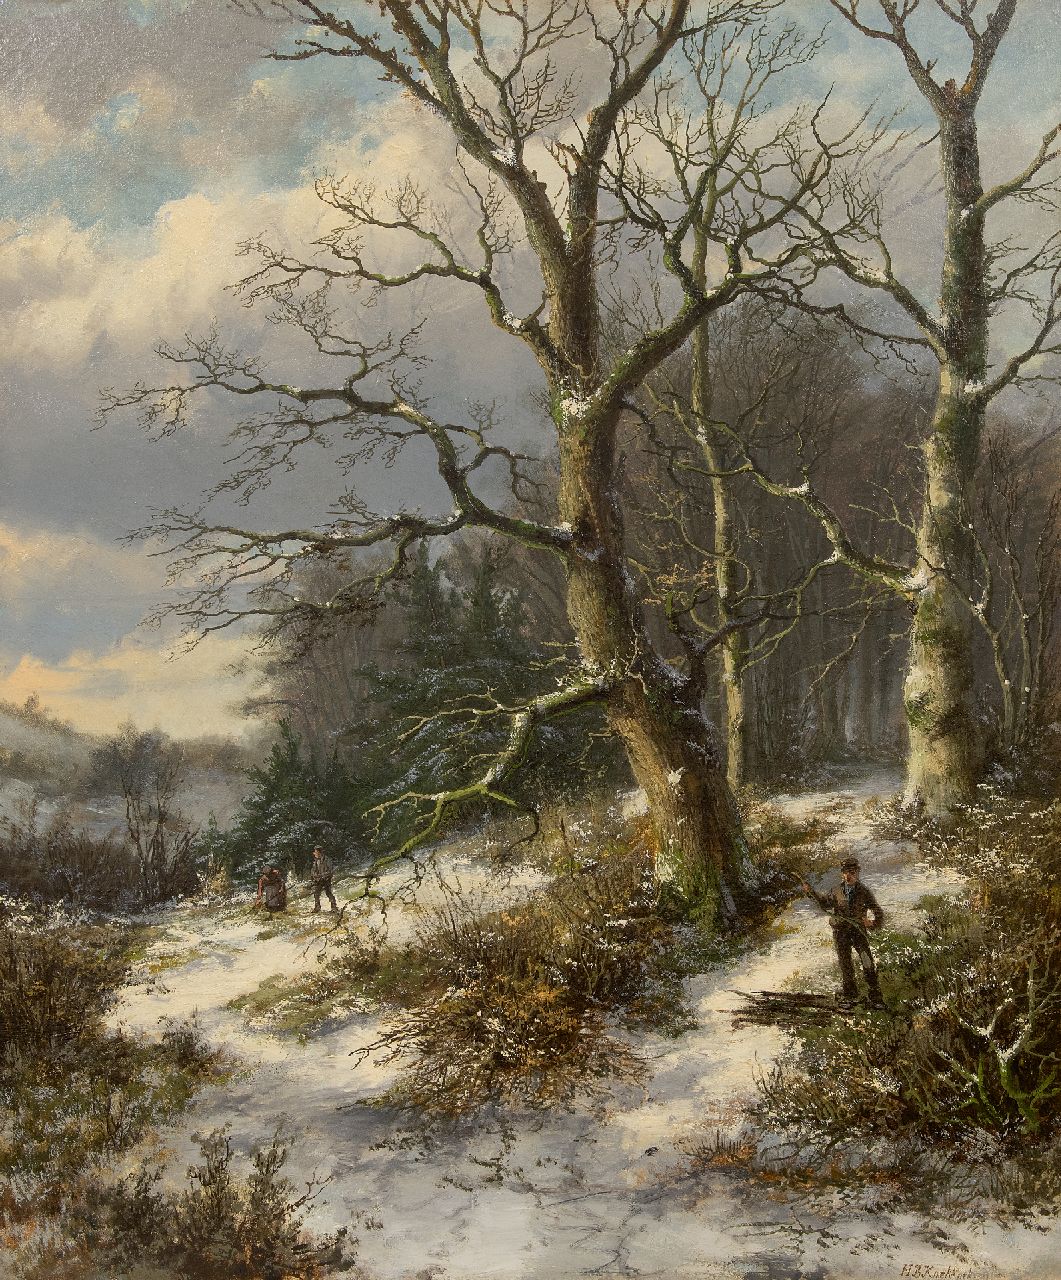 Koekkoek B.H.  | Barend Hendrik 'H.B.' Koekkoek, Gathering wood in a snowy forest, oil on canvas 76.6 x 63.8 cm, signed l.r.